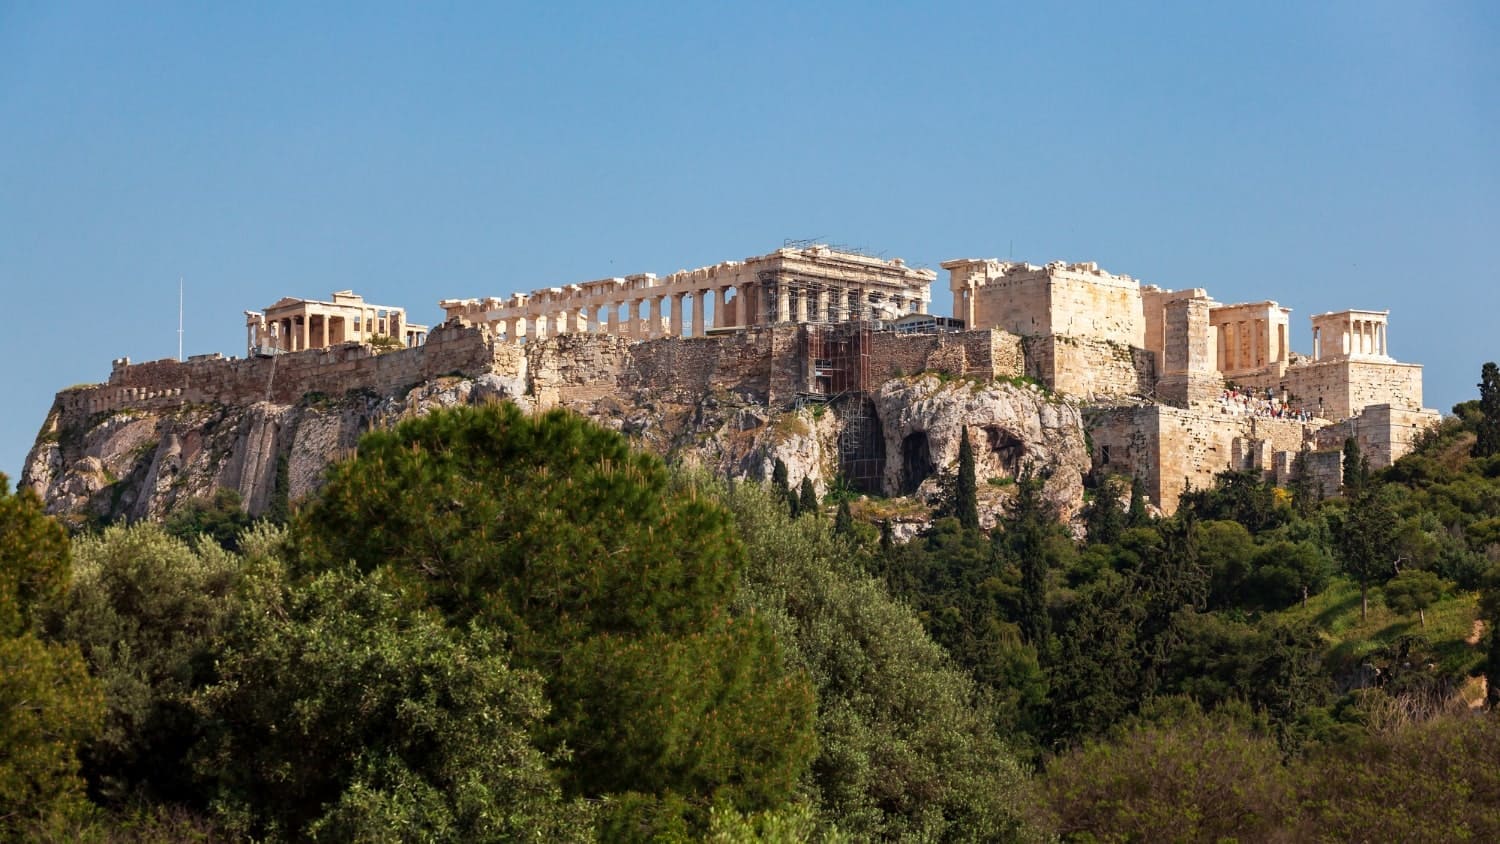 Greece - Athens